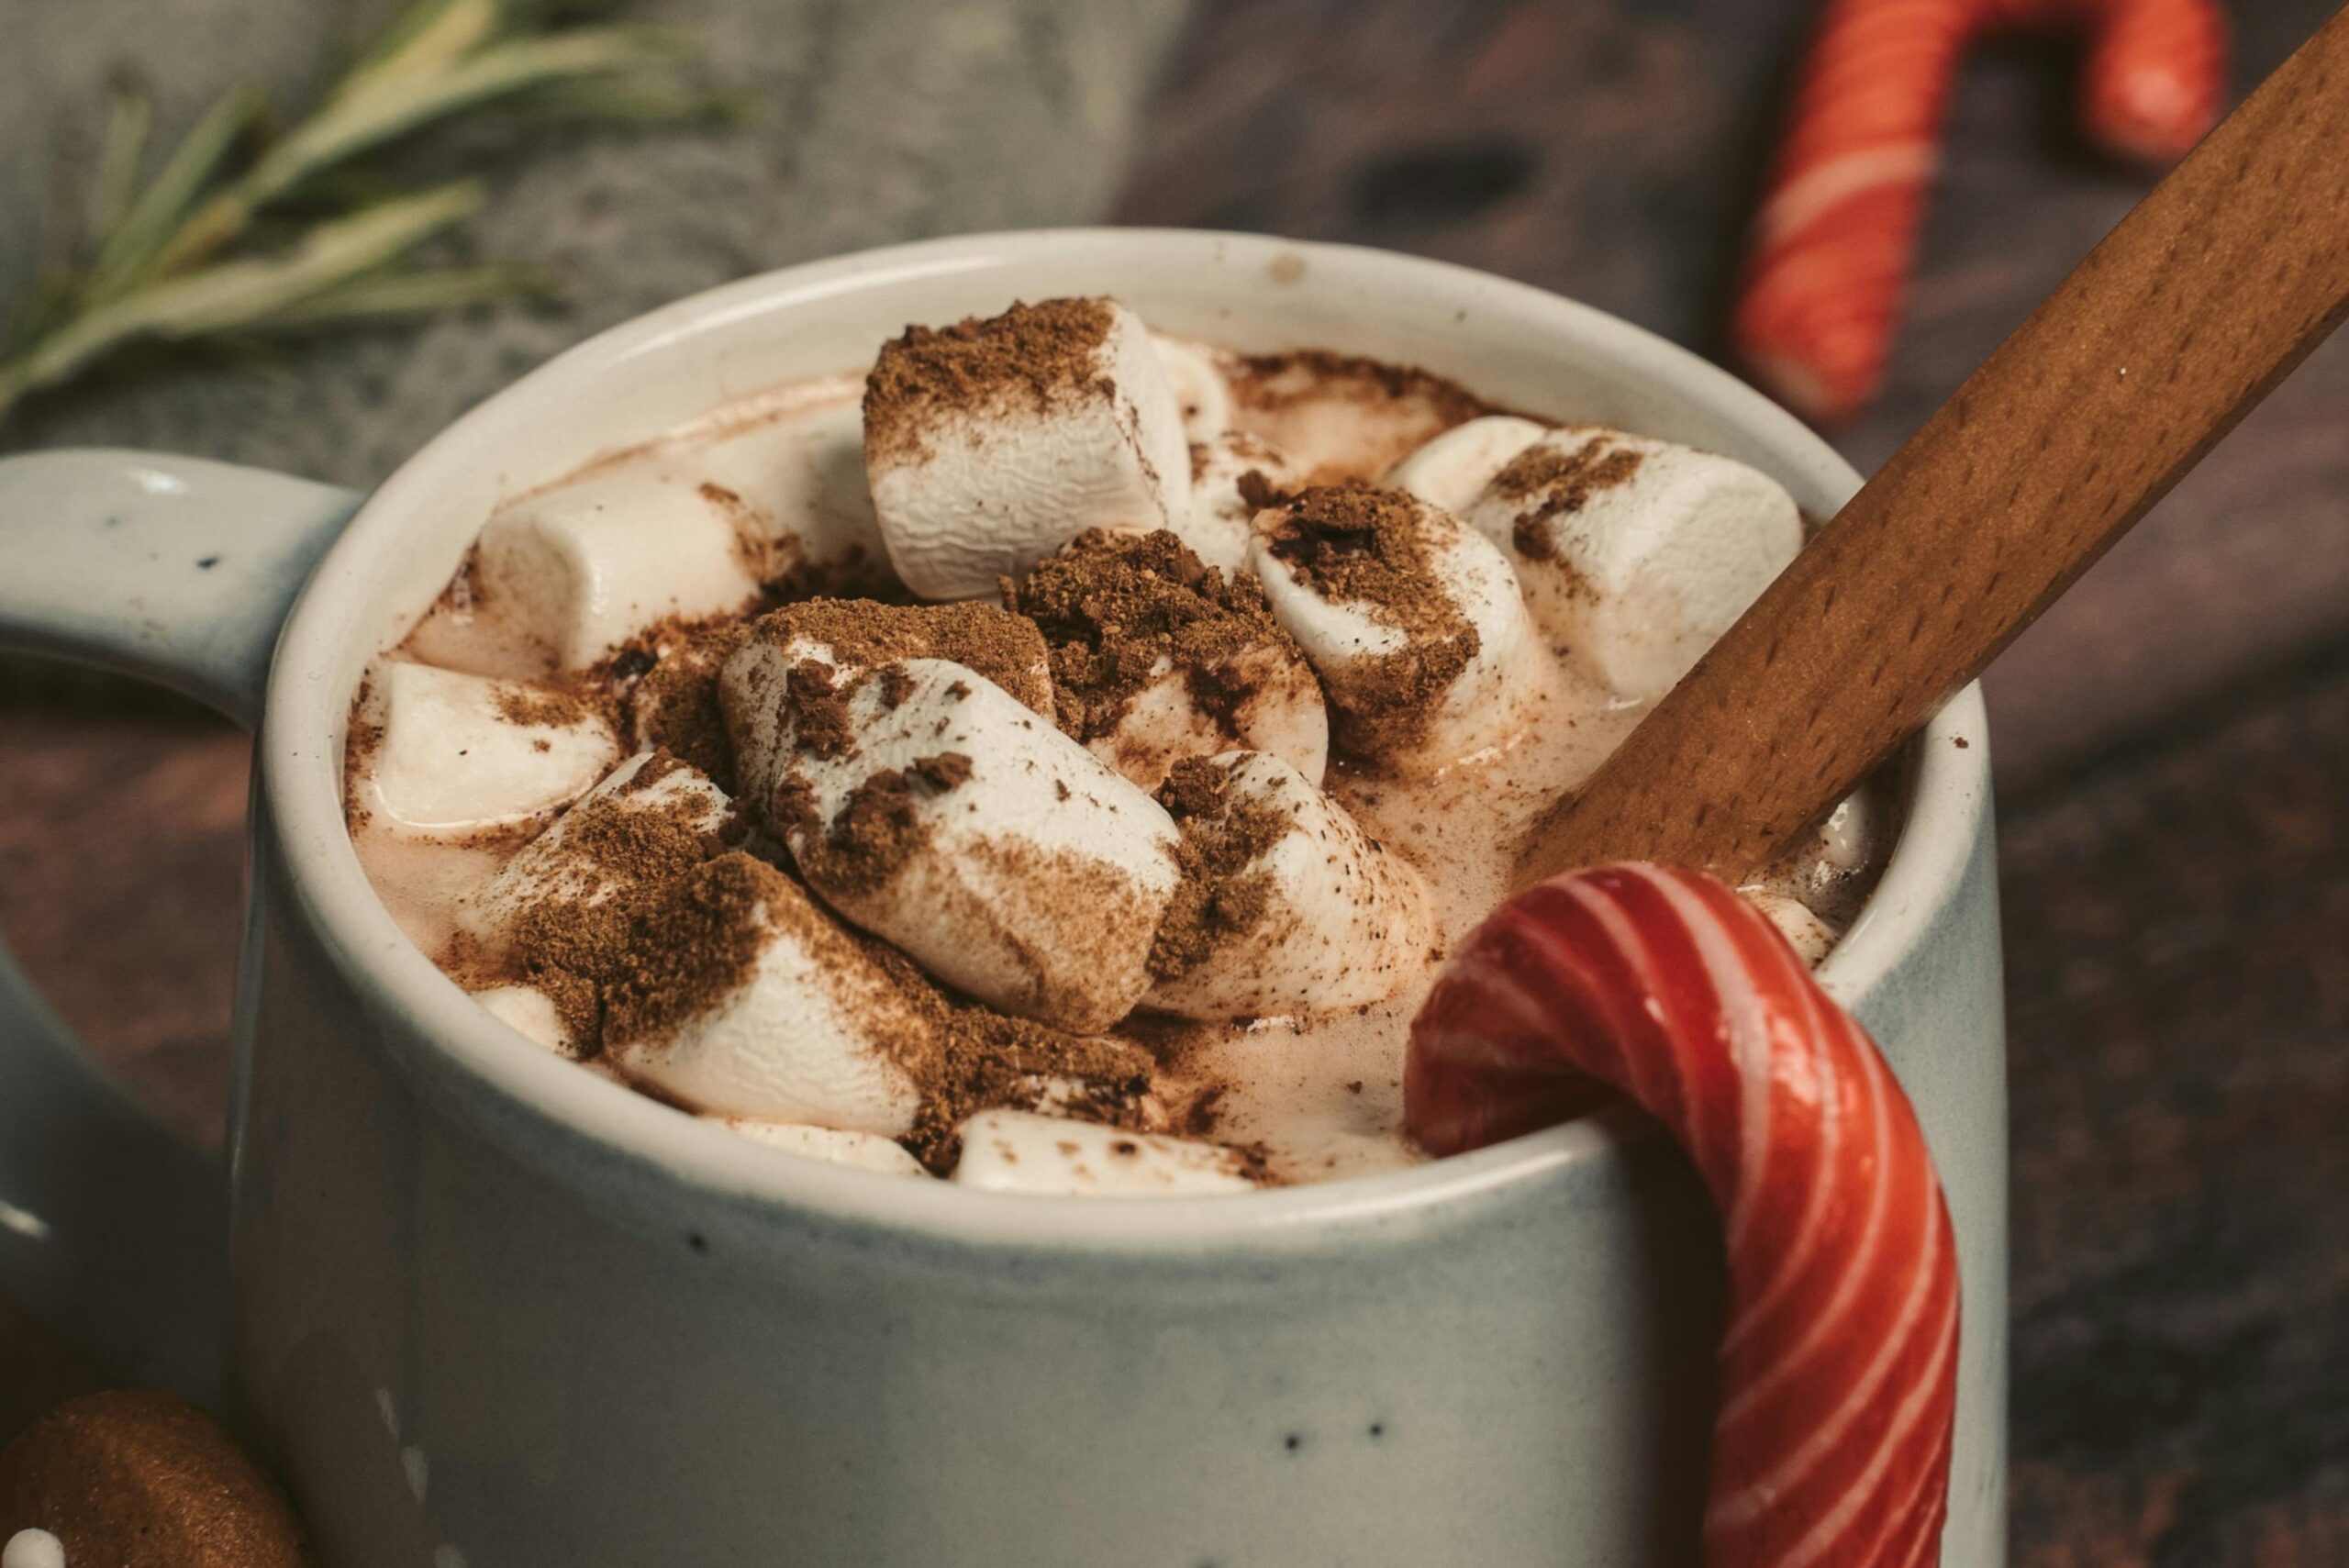 A closeup of a mug filled with hot chocolate